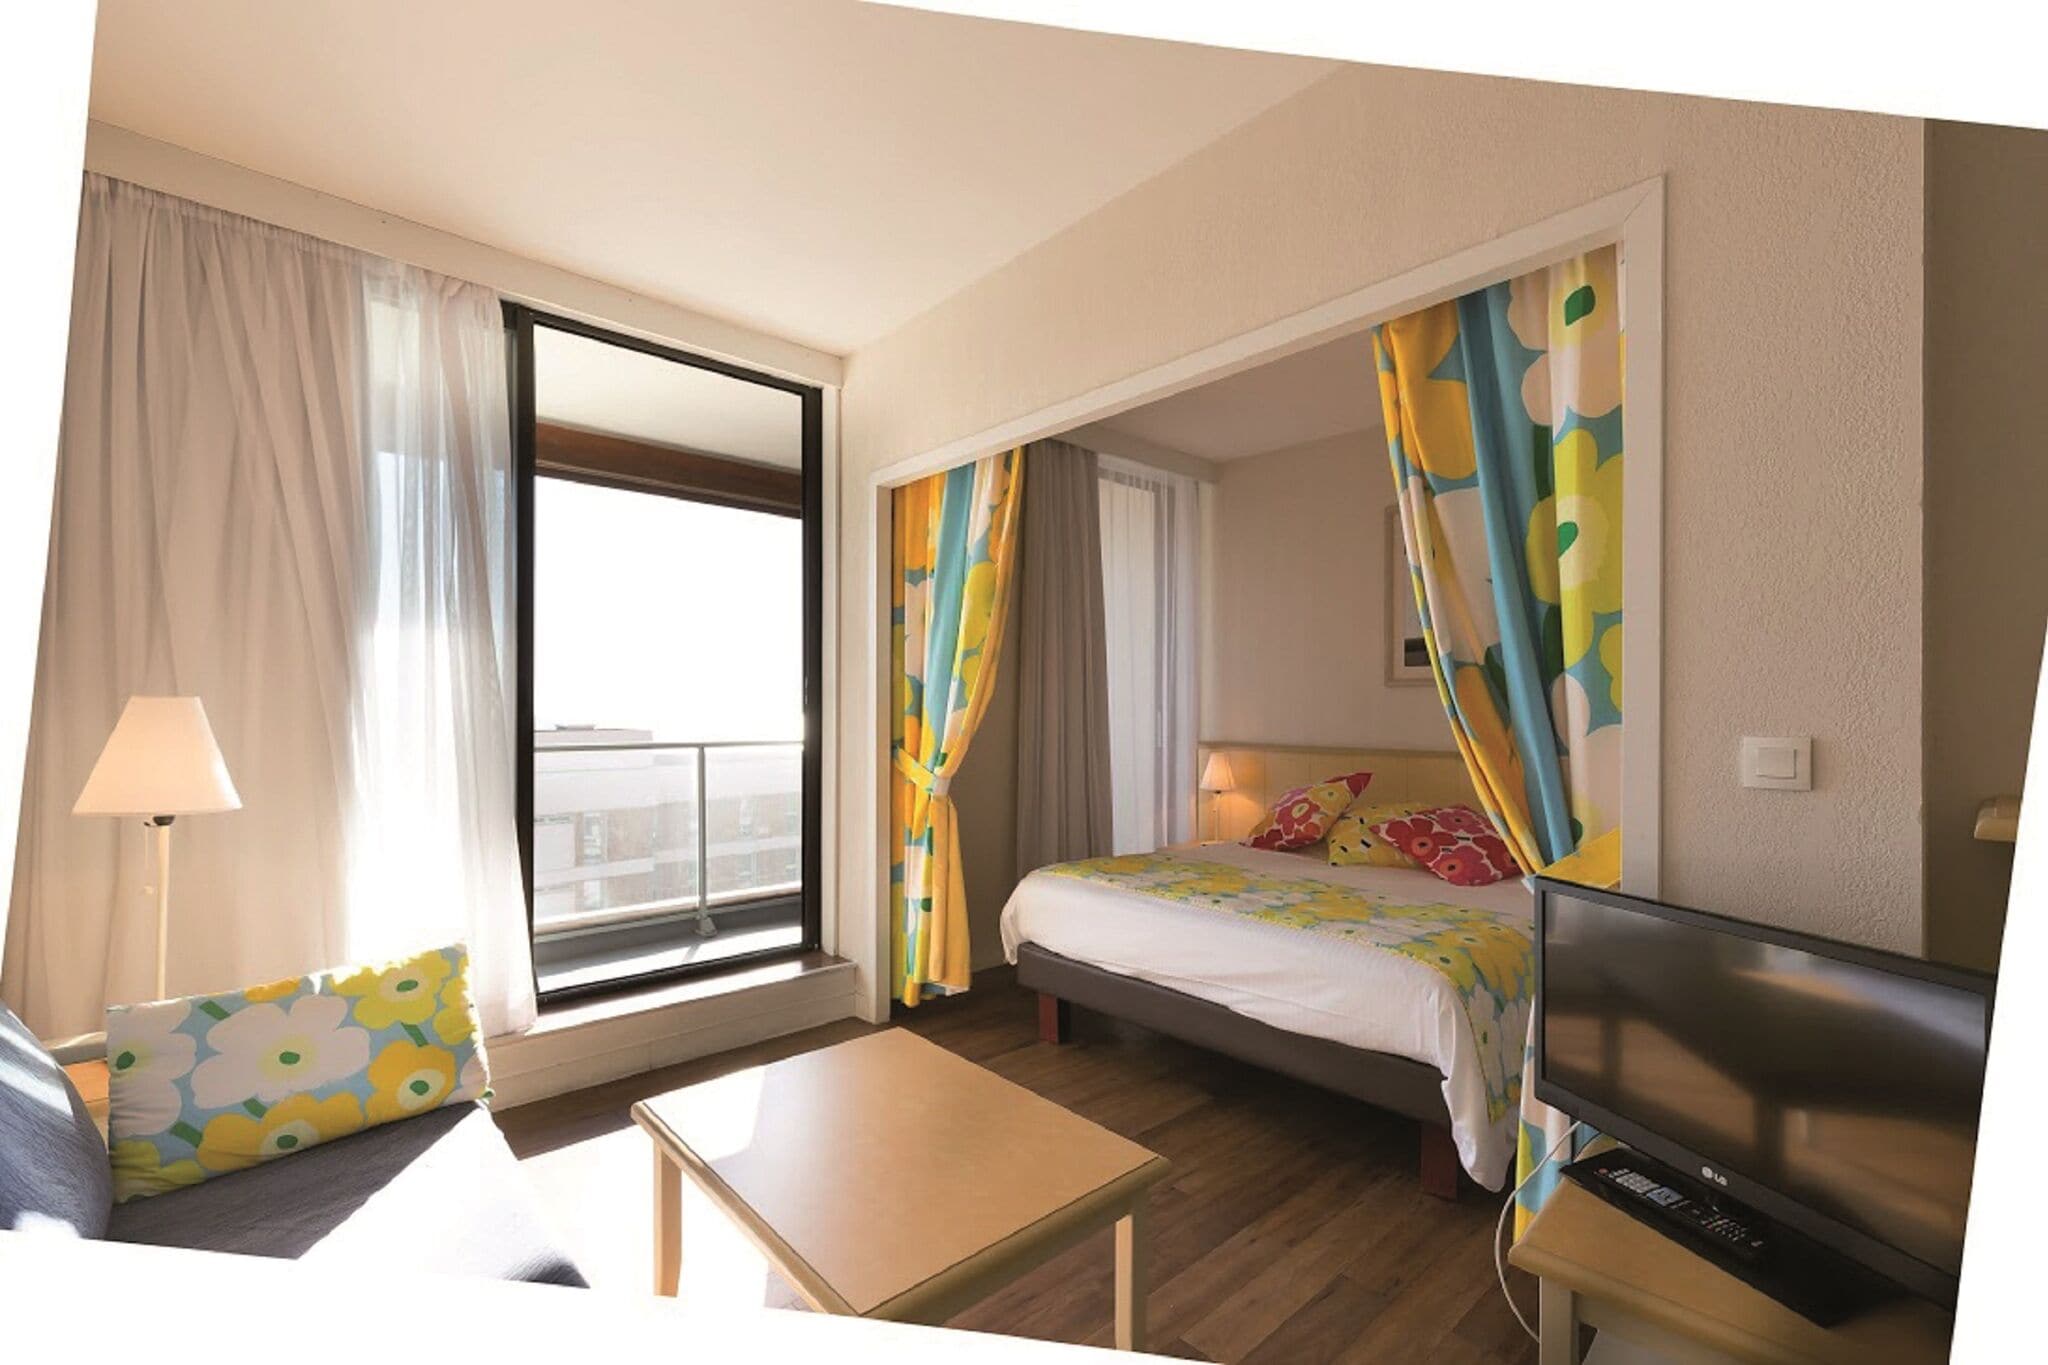 Apartment with balcony in seaside resort Biarritz